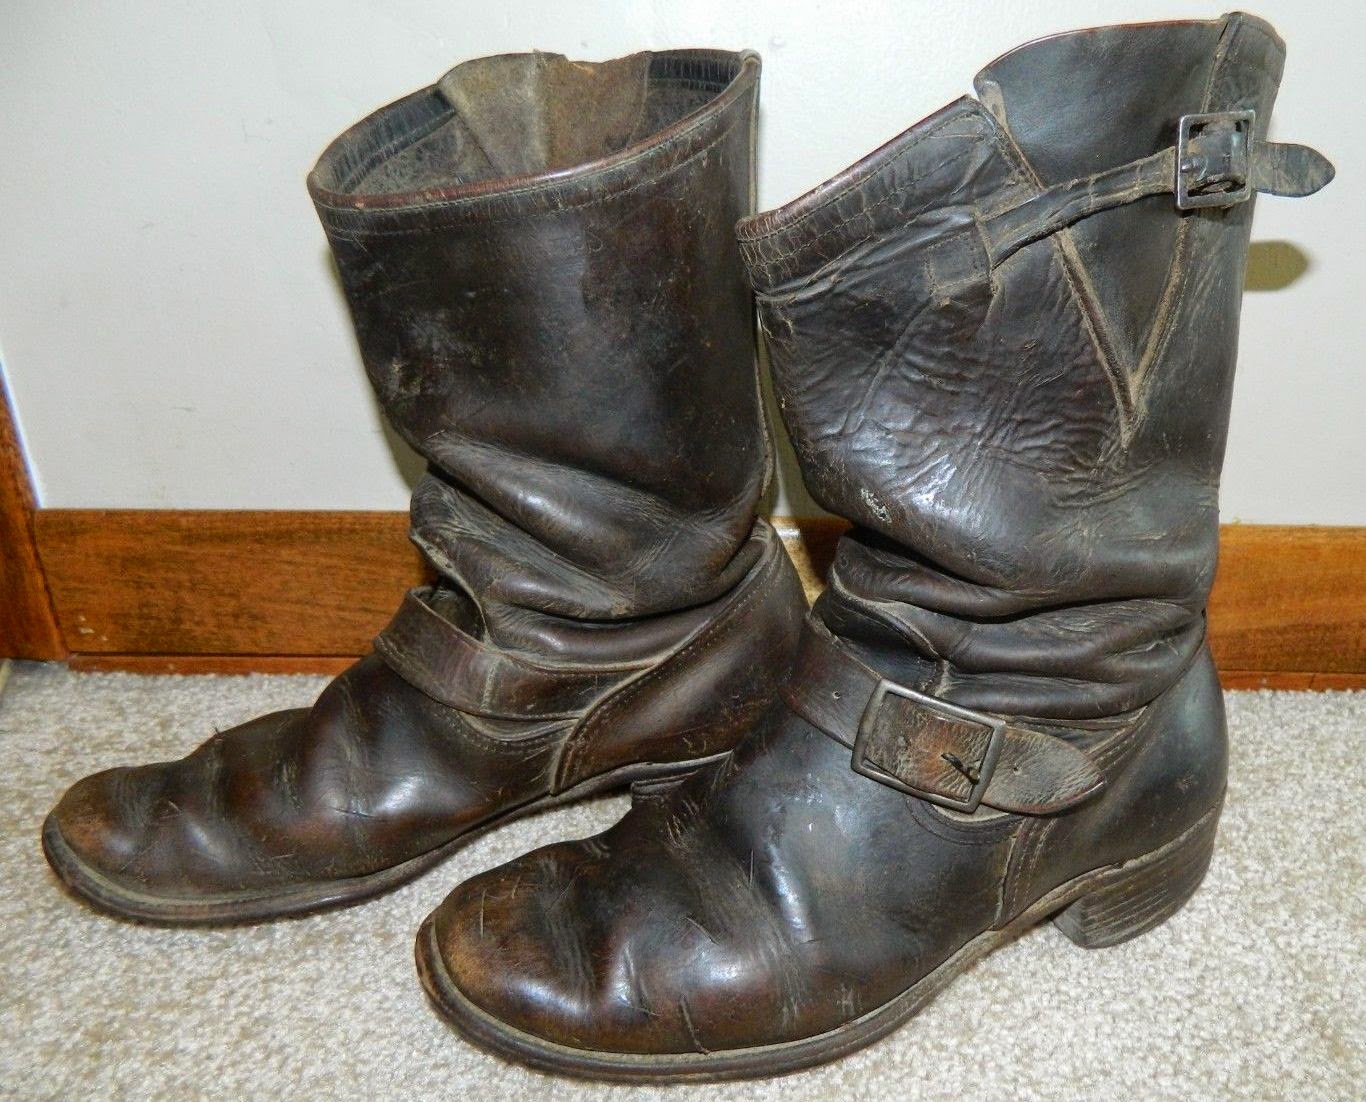 Vintage Engineer Boots: August 2014